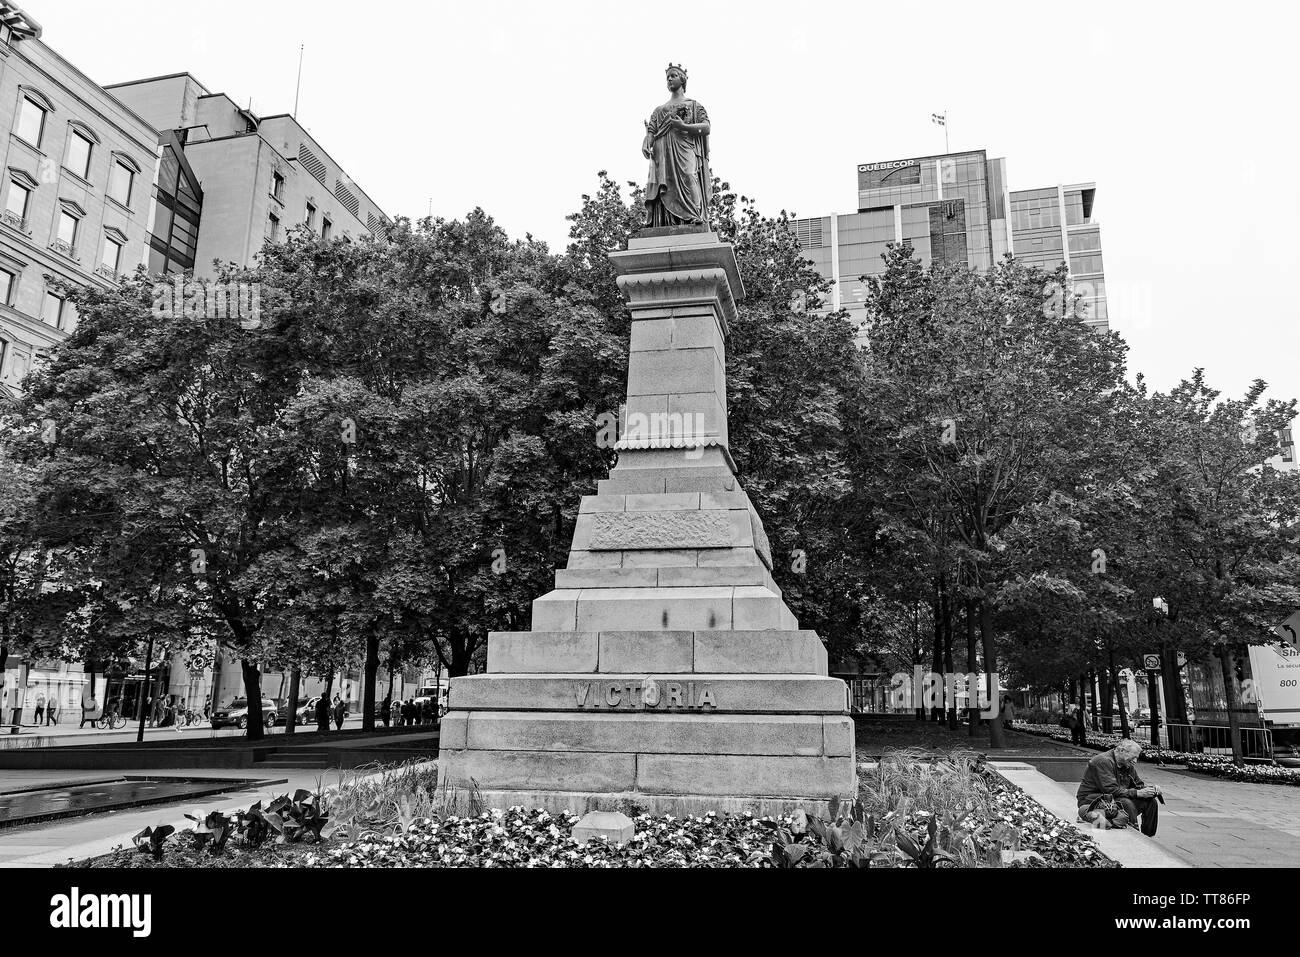 Queen Victoria statue, Old Montreal Stock Photo